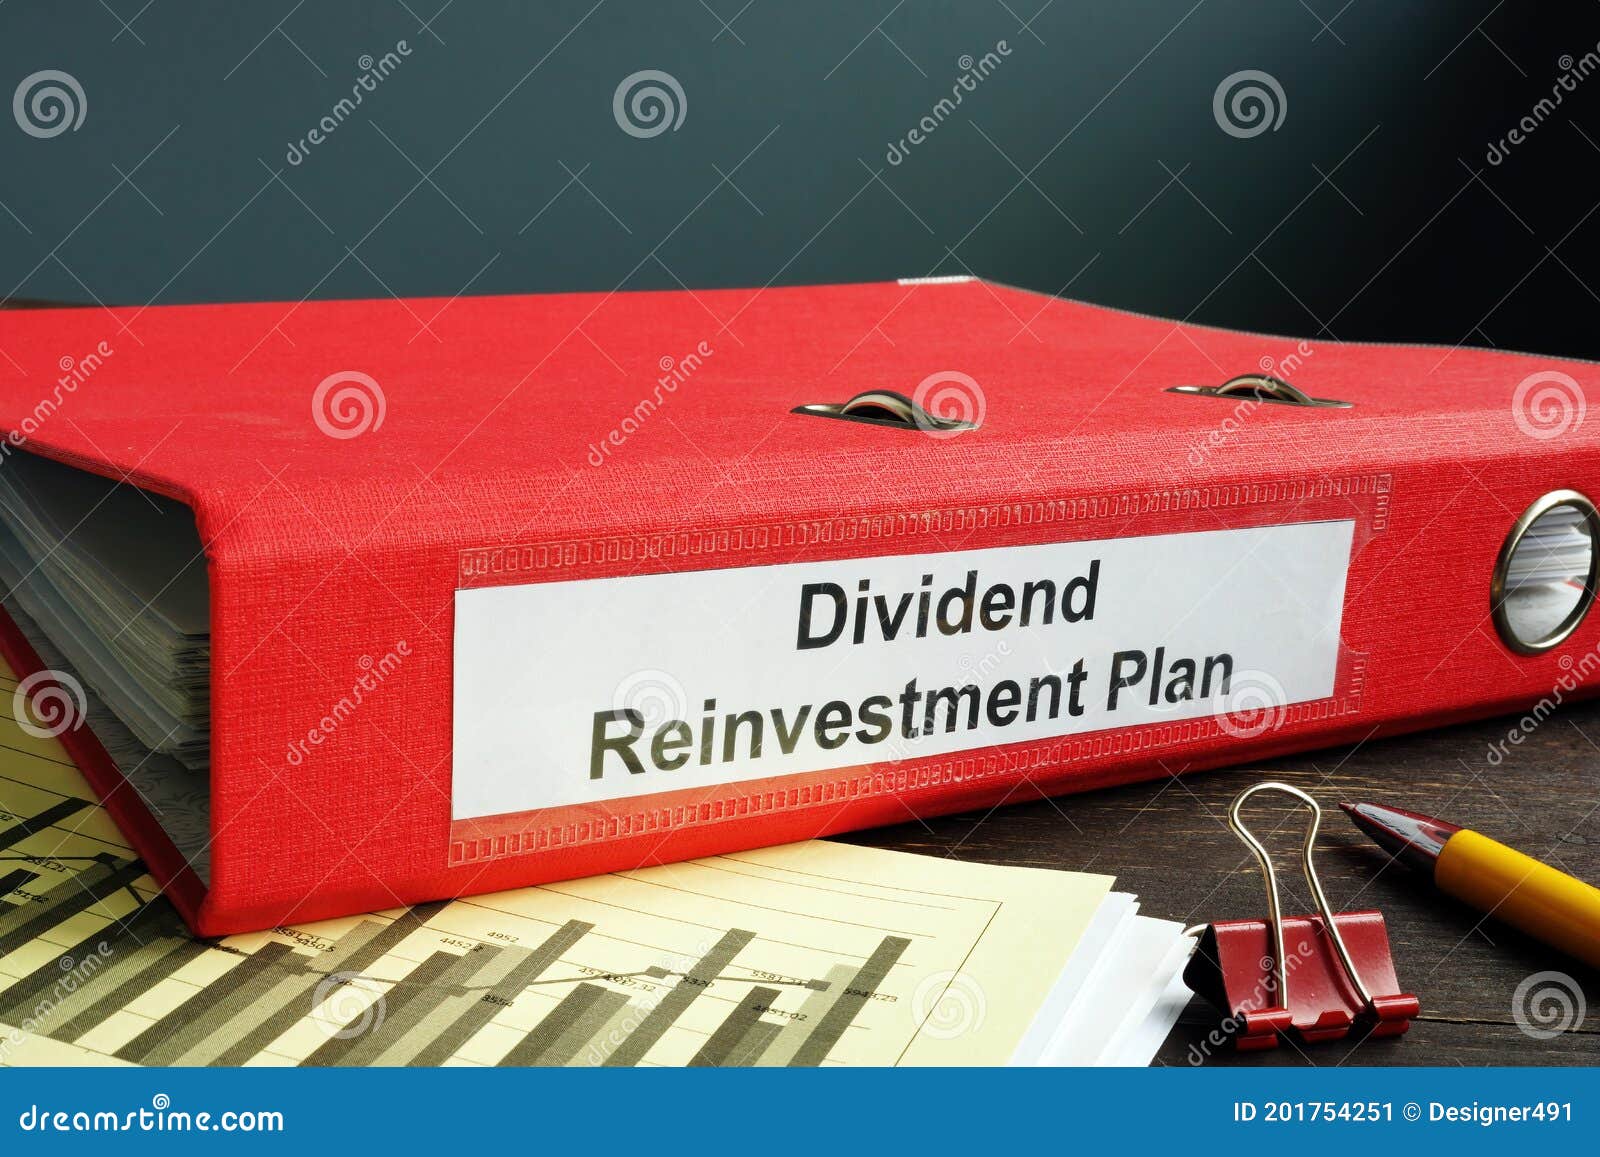 dividend reinvestment plan drip in the folder.